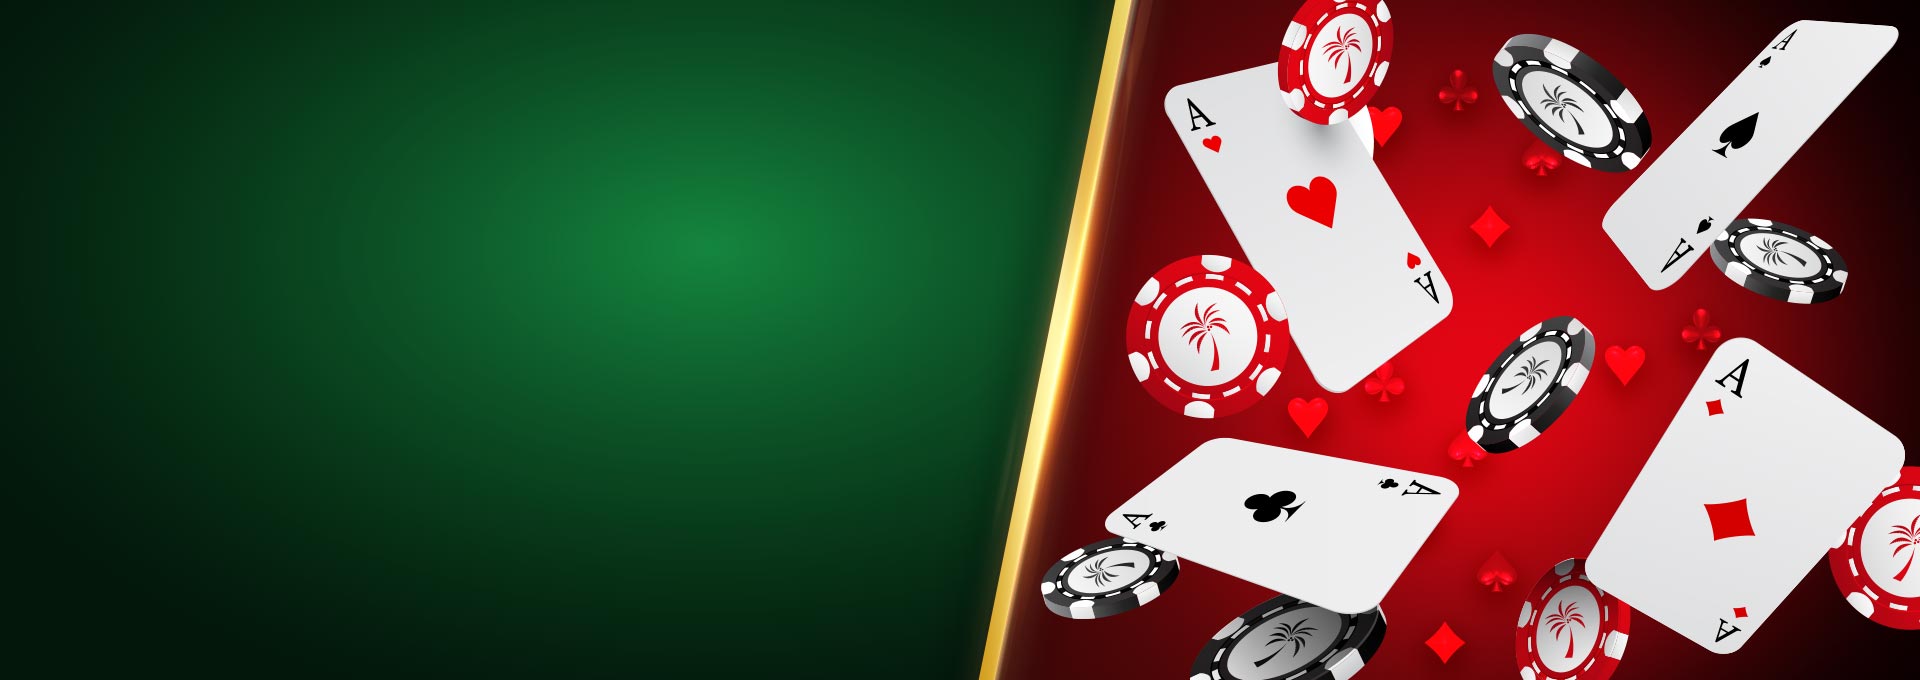 Vegas Wins カジノゲームオンライン